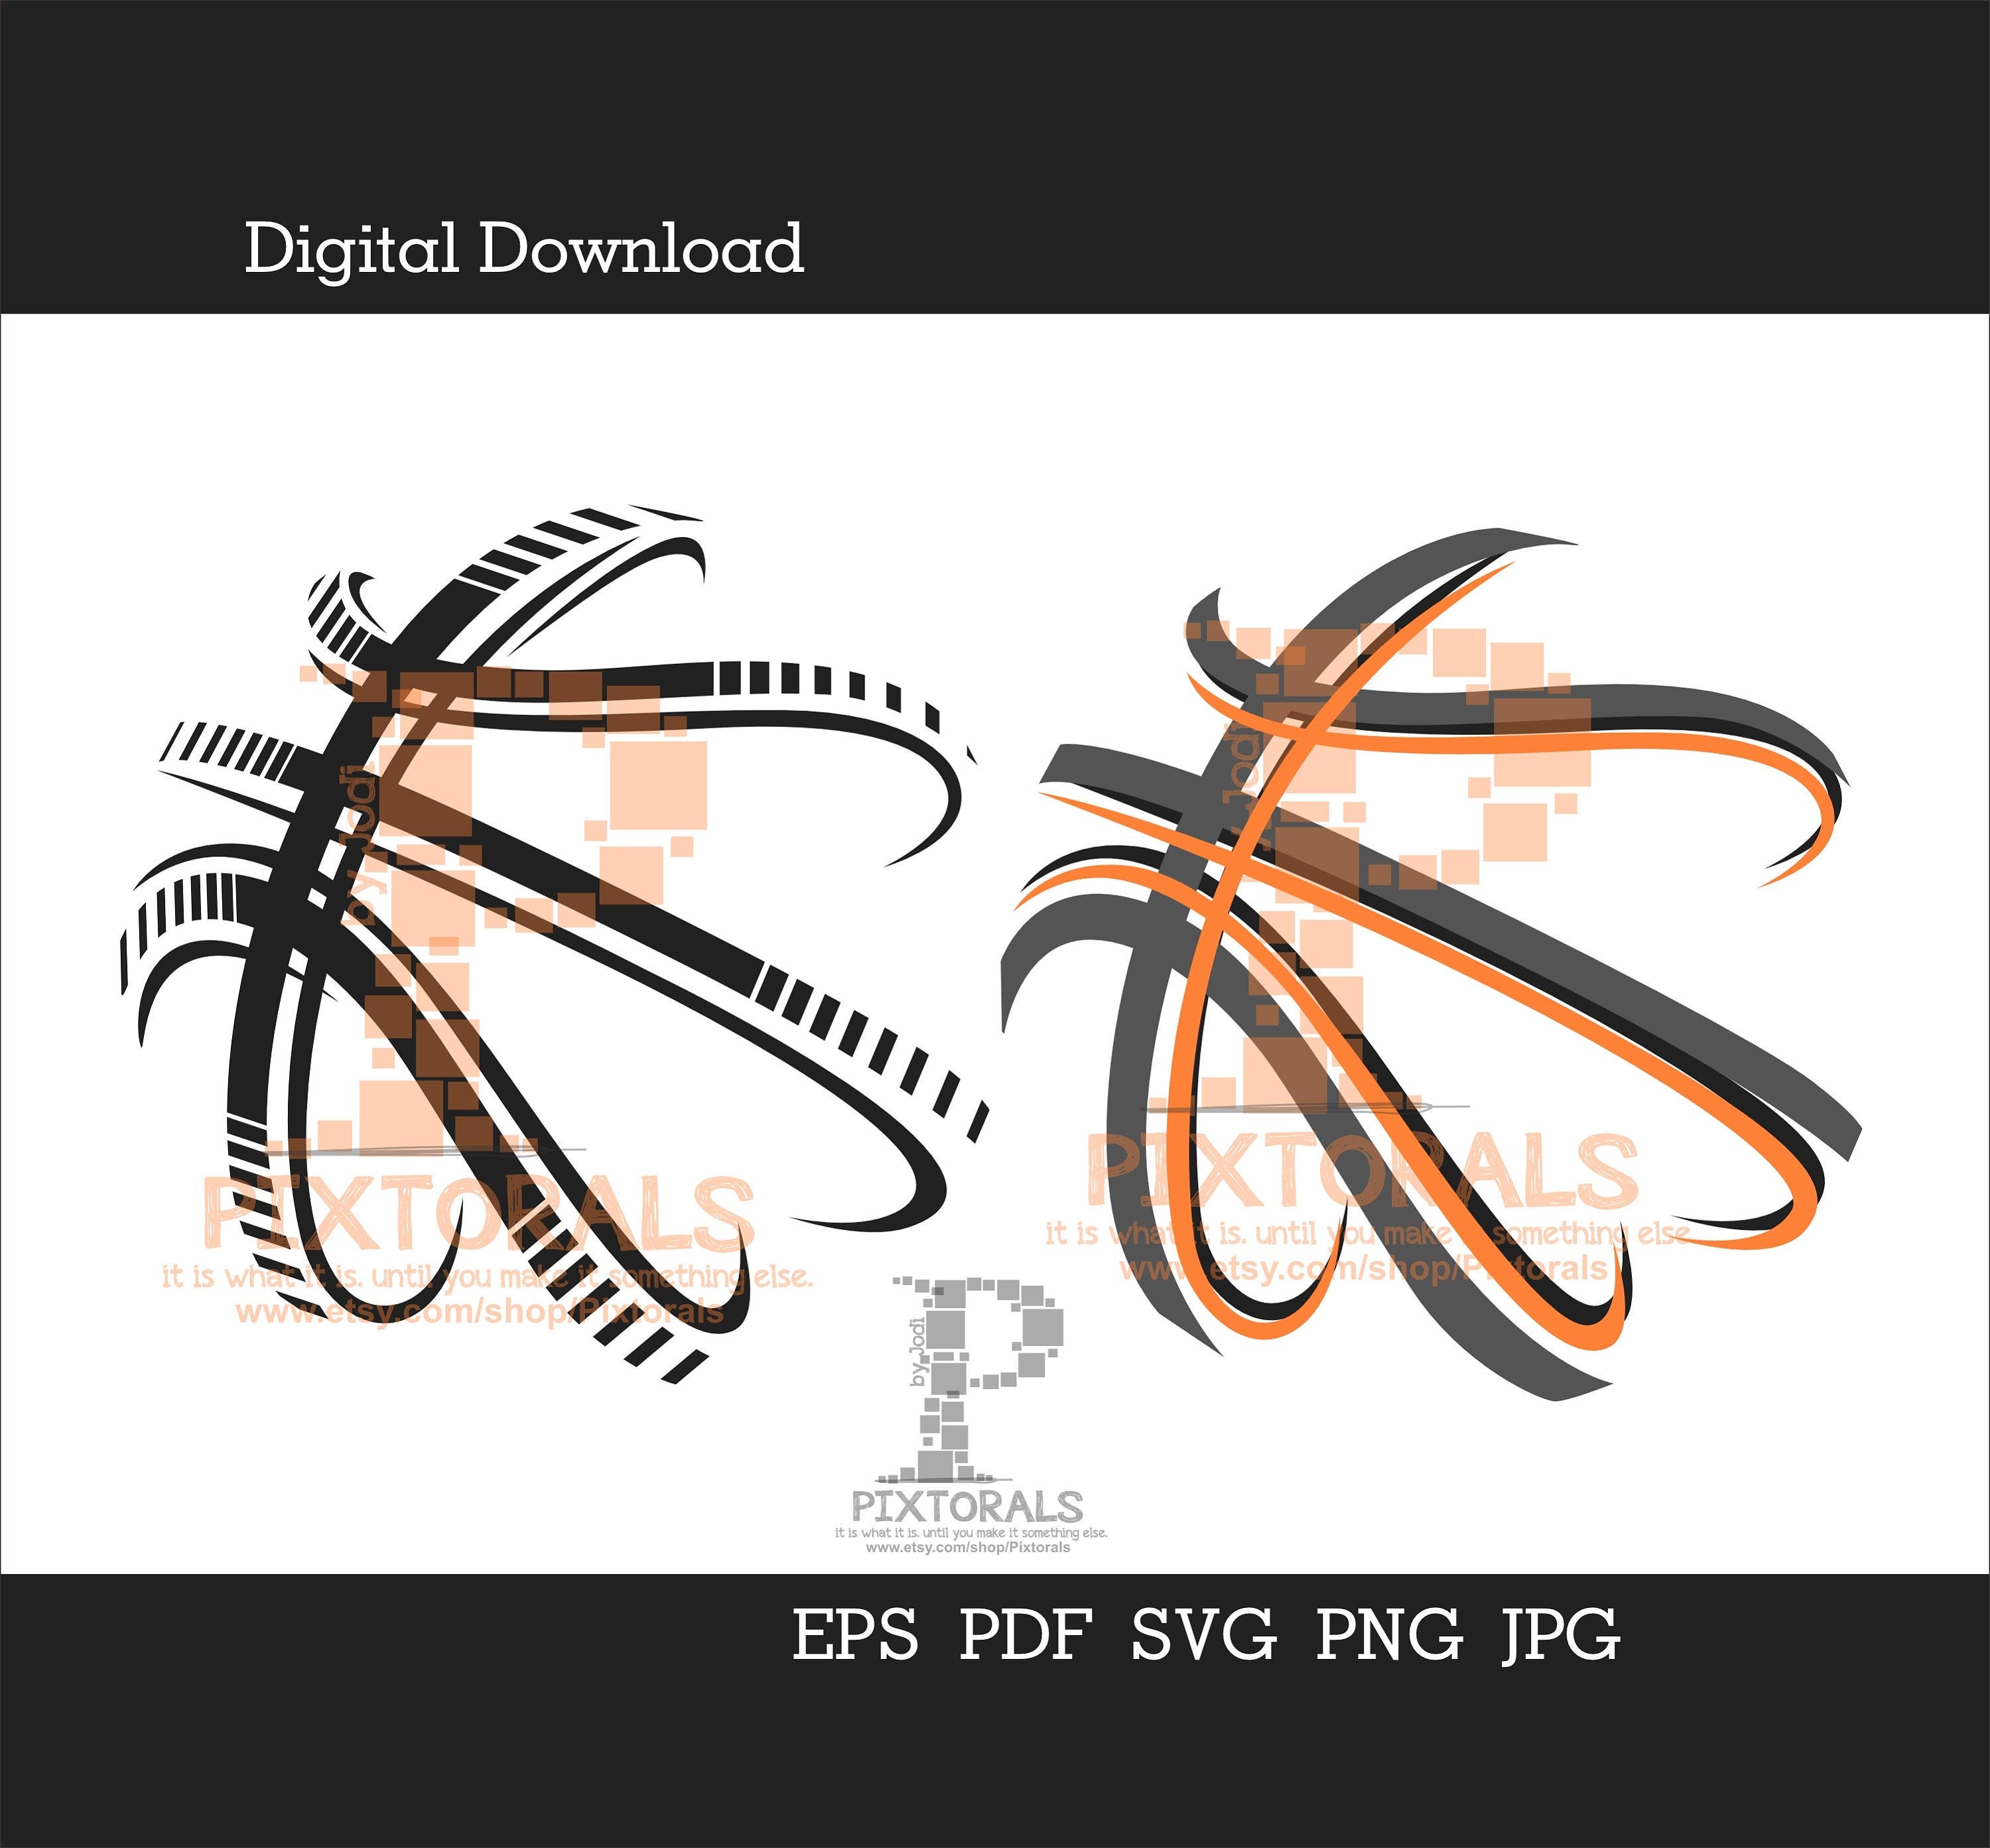 Basketball Digital Download, eps, svg, pdf, jpg and png, T-shirt Graphics, screen printing, sublimation, Vector Art